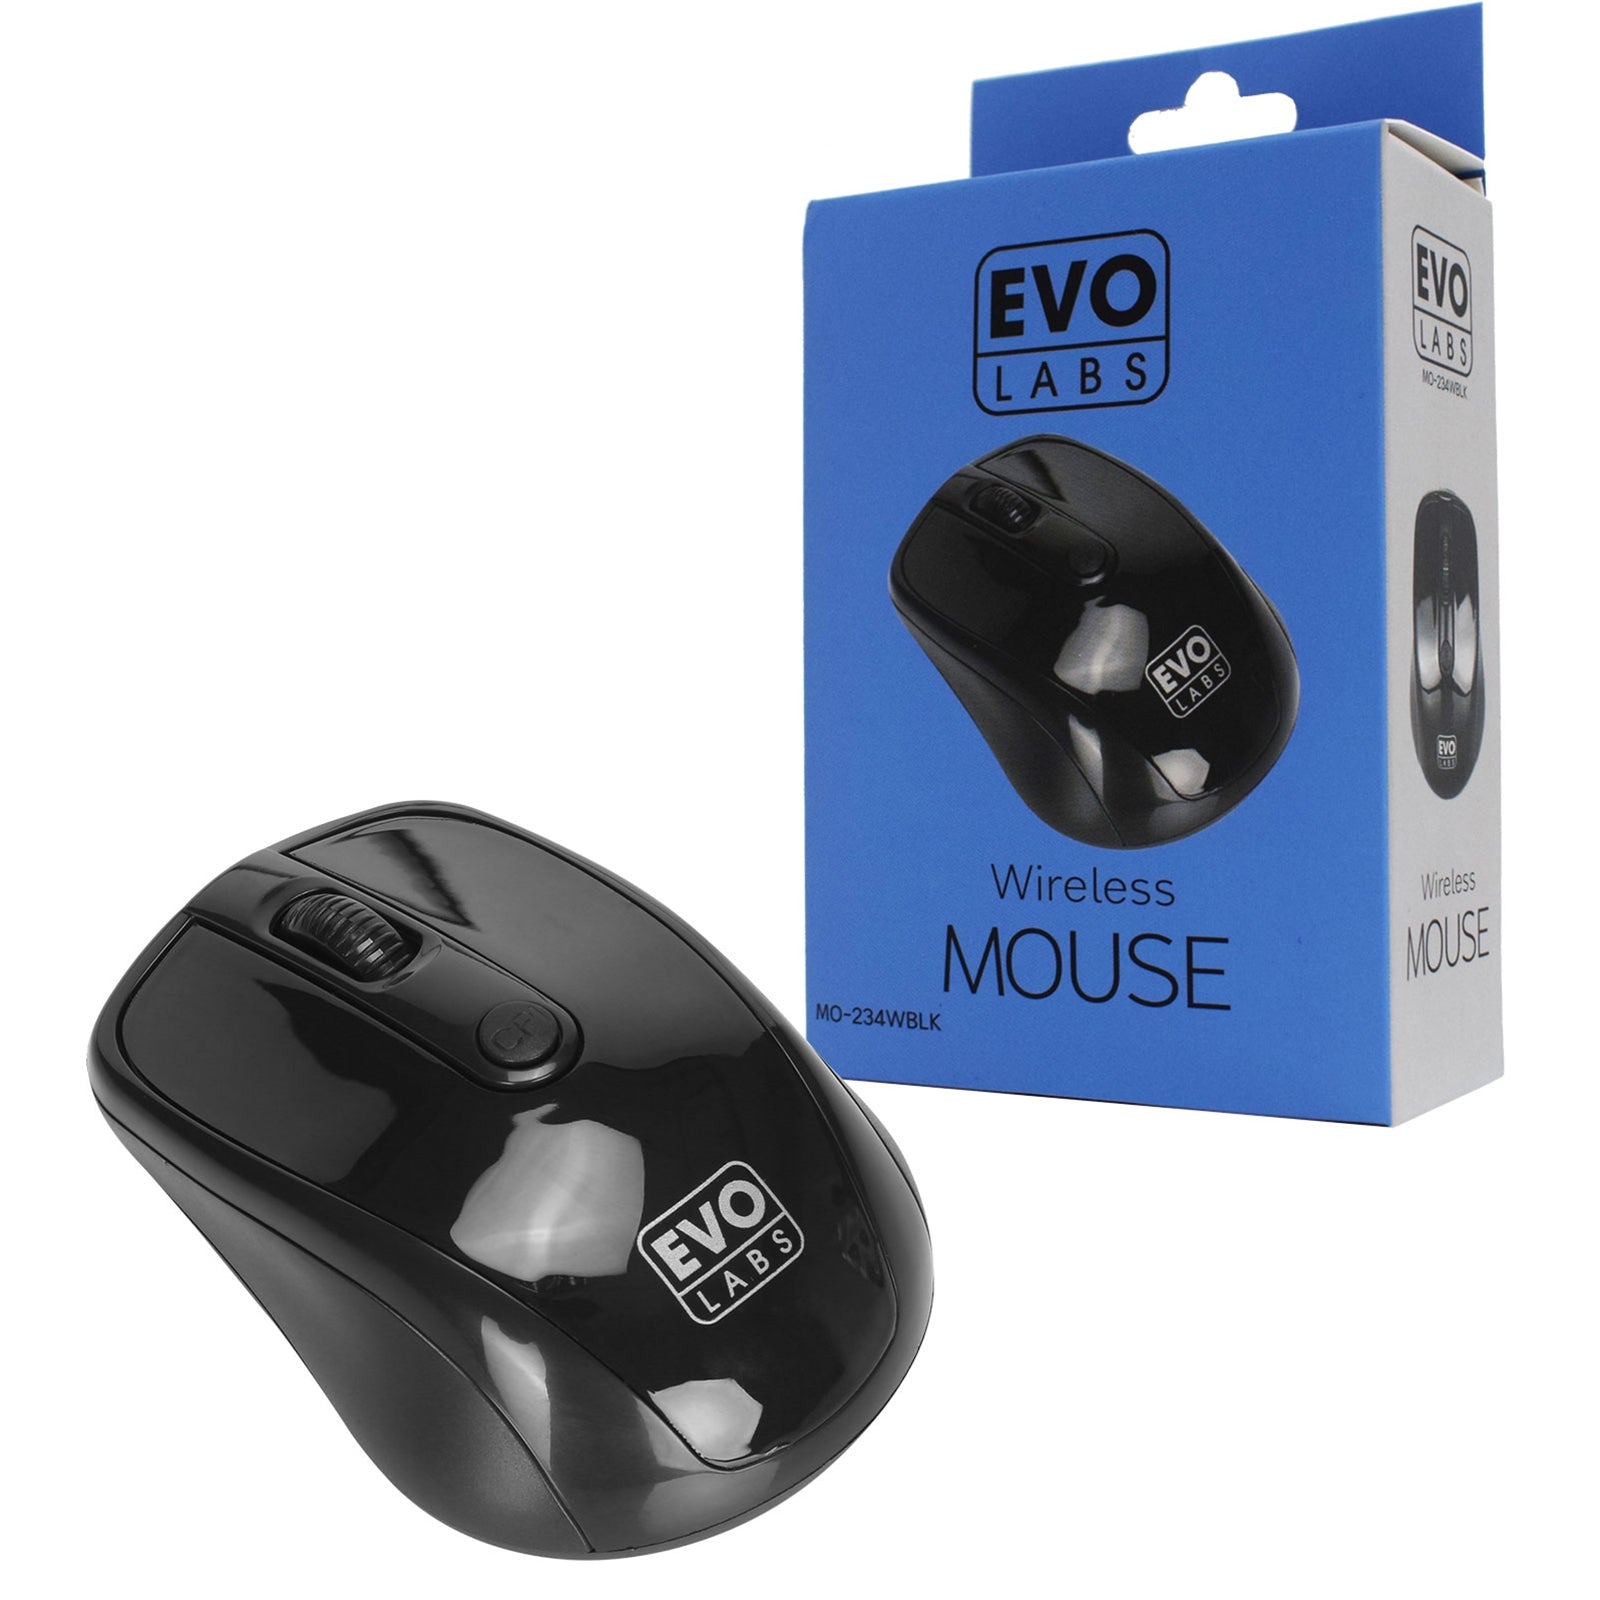 Evo Labs MO-234WBLK 2.4GHz Wireless Optical Mouse with USB Mini Receiver Black